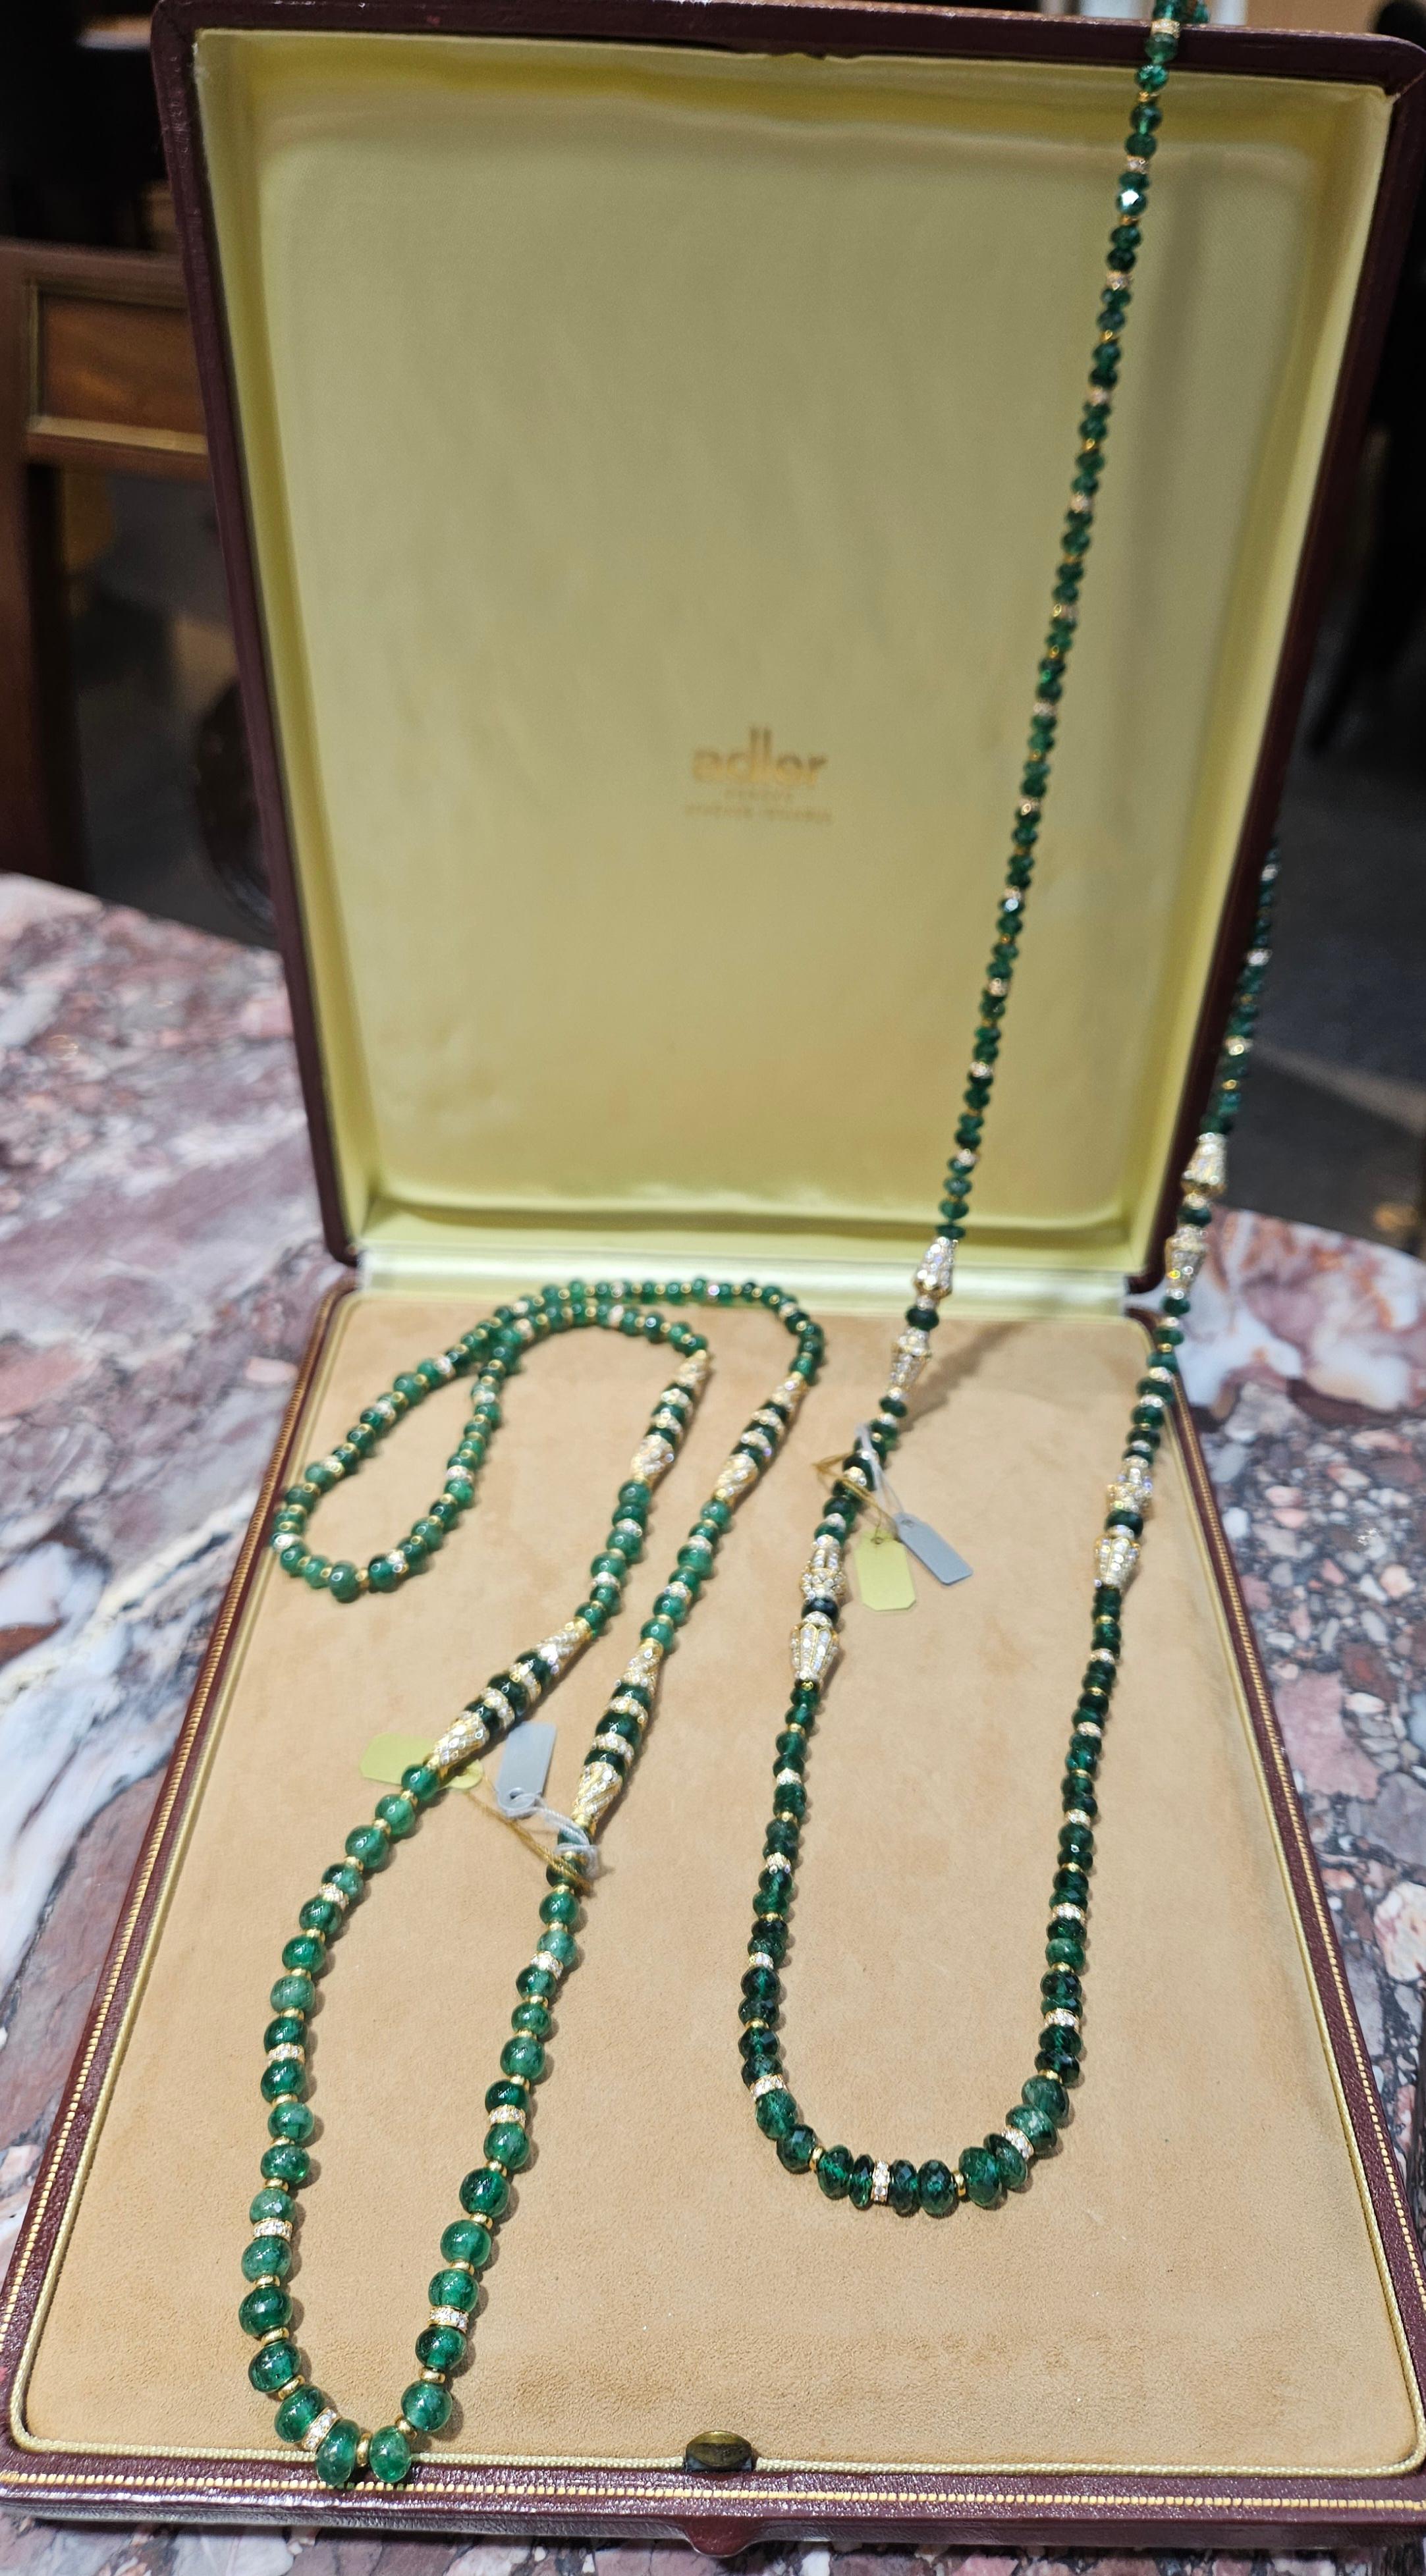 Adler Genèva 18kt Gold Necklaces 480ct Faceted Bead Emeralds CGL Certified For Sale 13